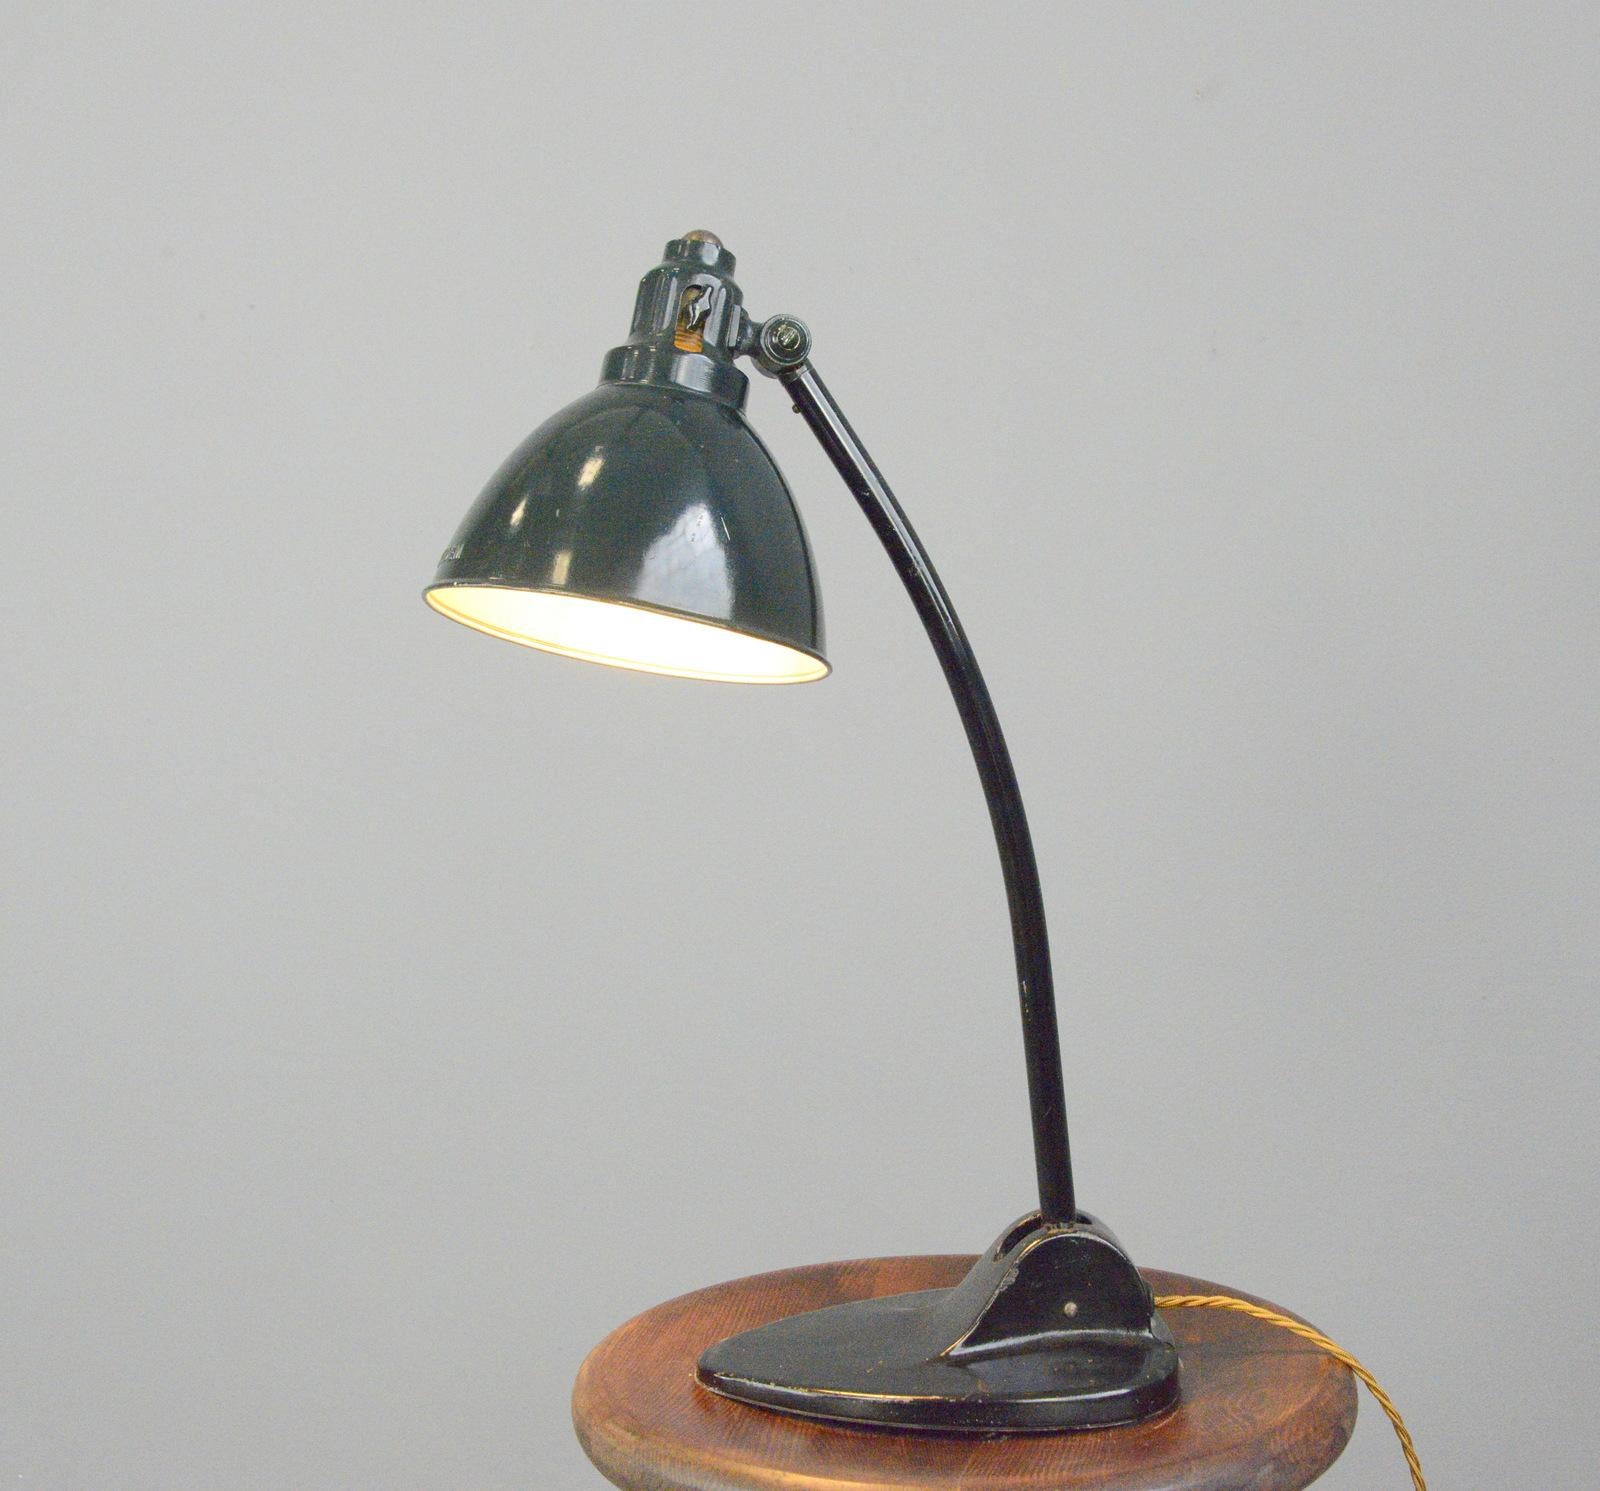 Kandem model 573 table lamp Circa 1920s

- Pressed steel shade
- 